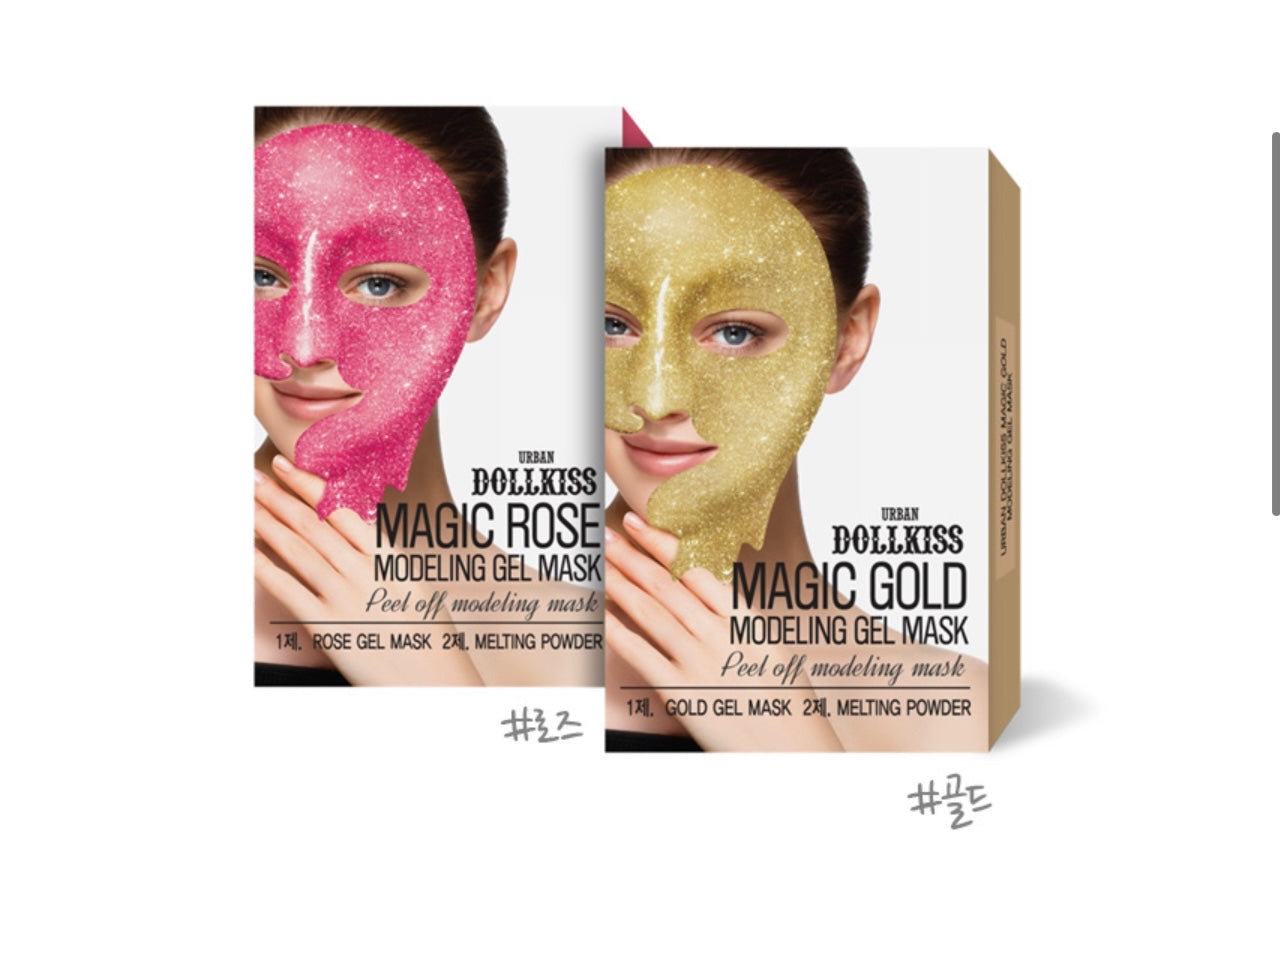 Magic Gold and Magic Rose Modeling Gel Mask